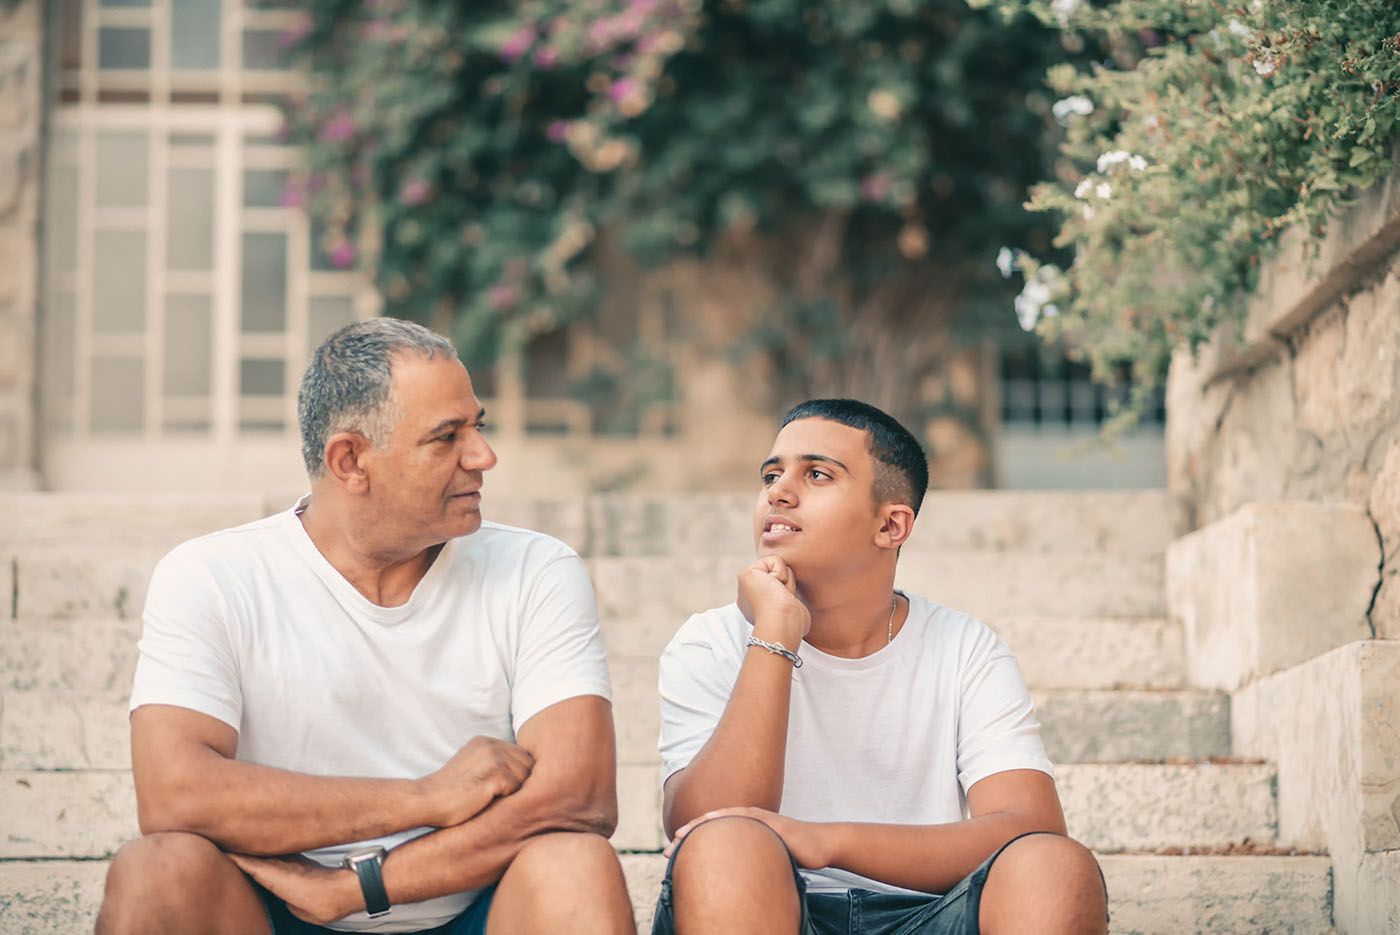 teen son talking with dad